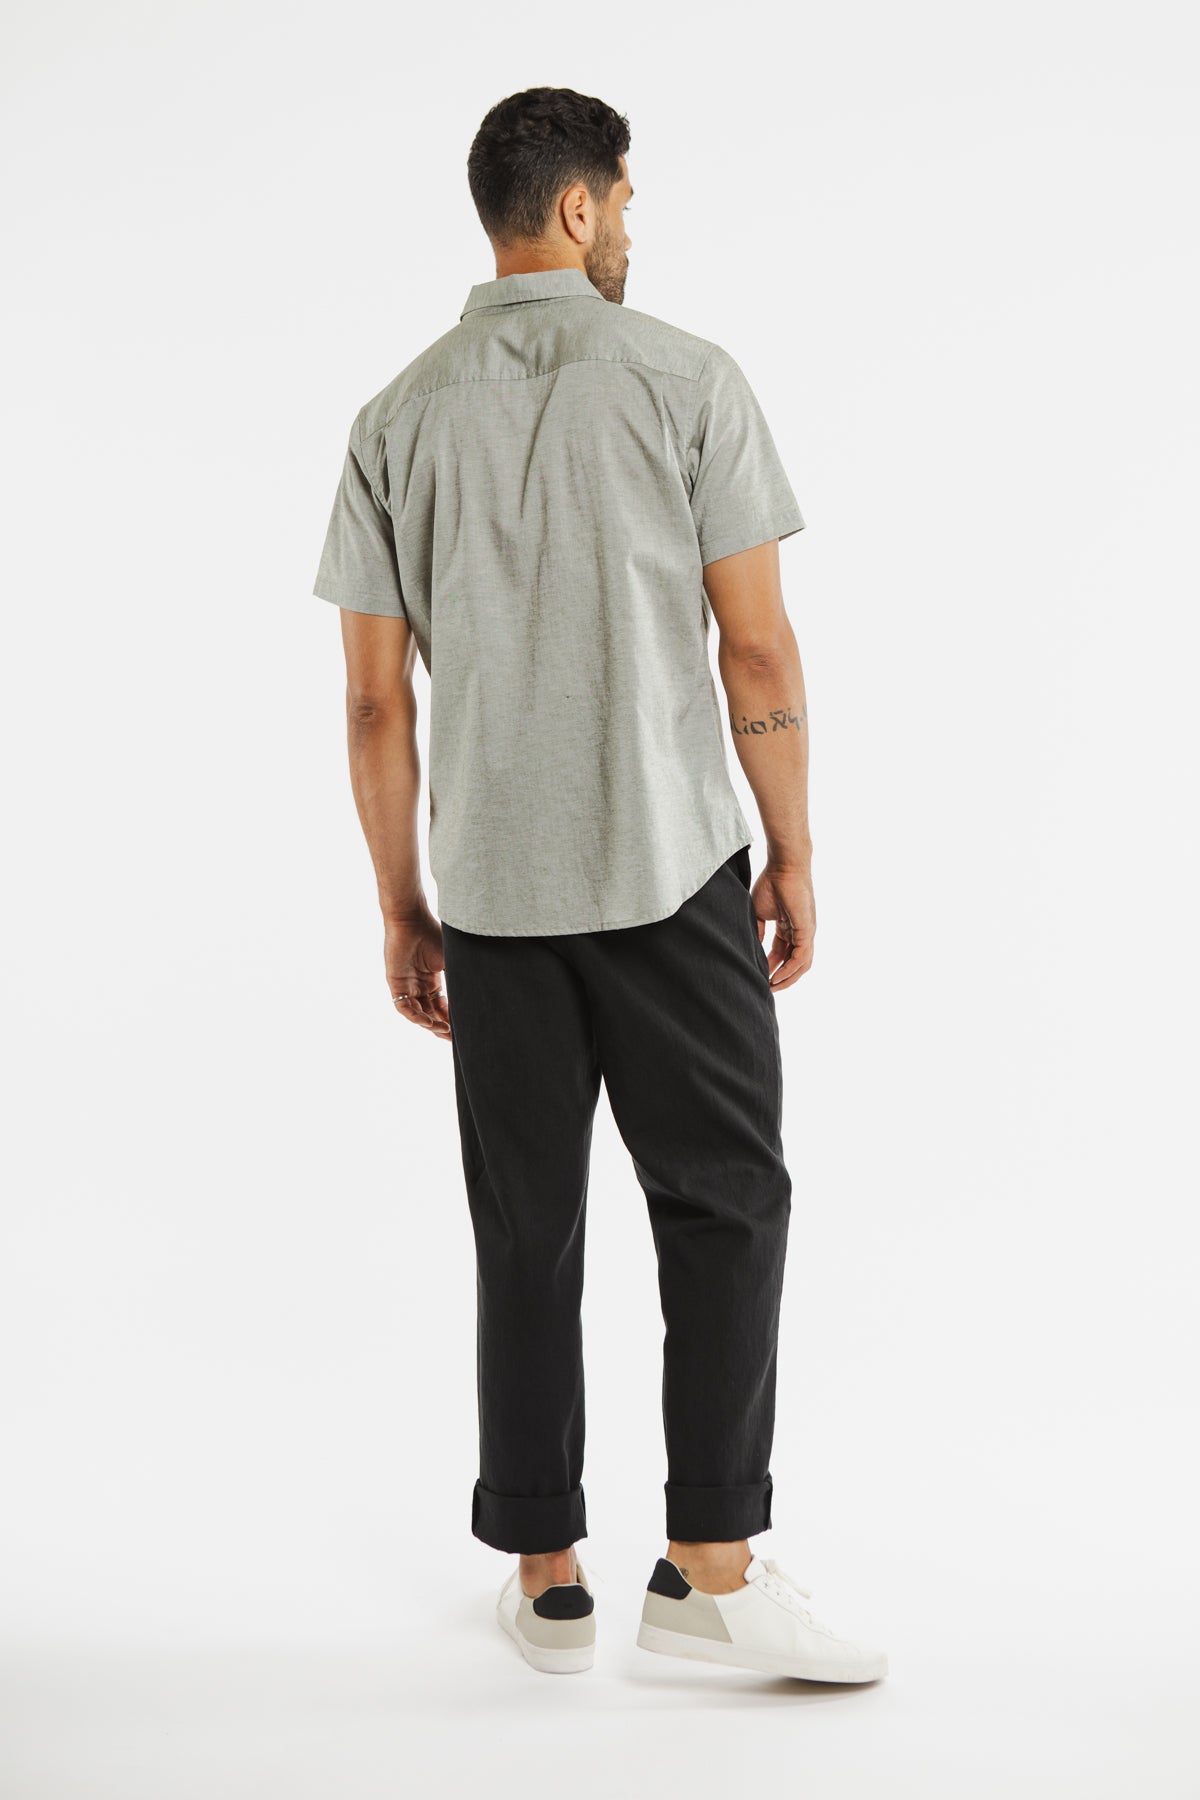 Jordan Slim Shirt / Sage